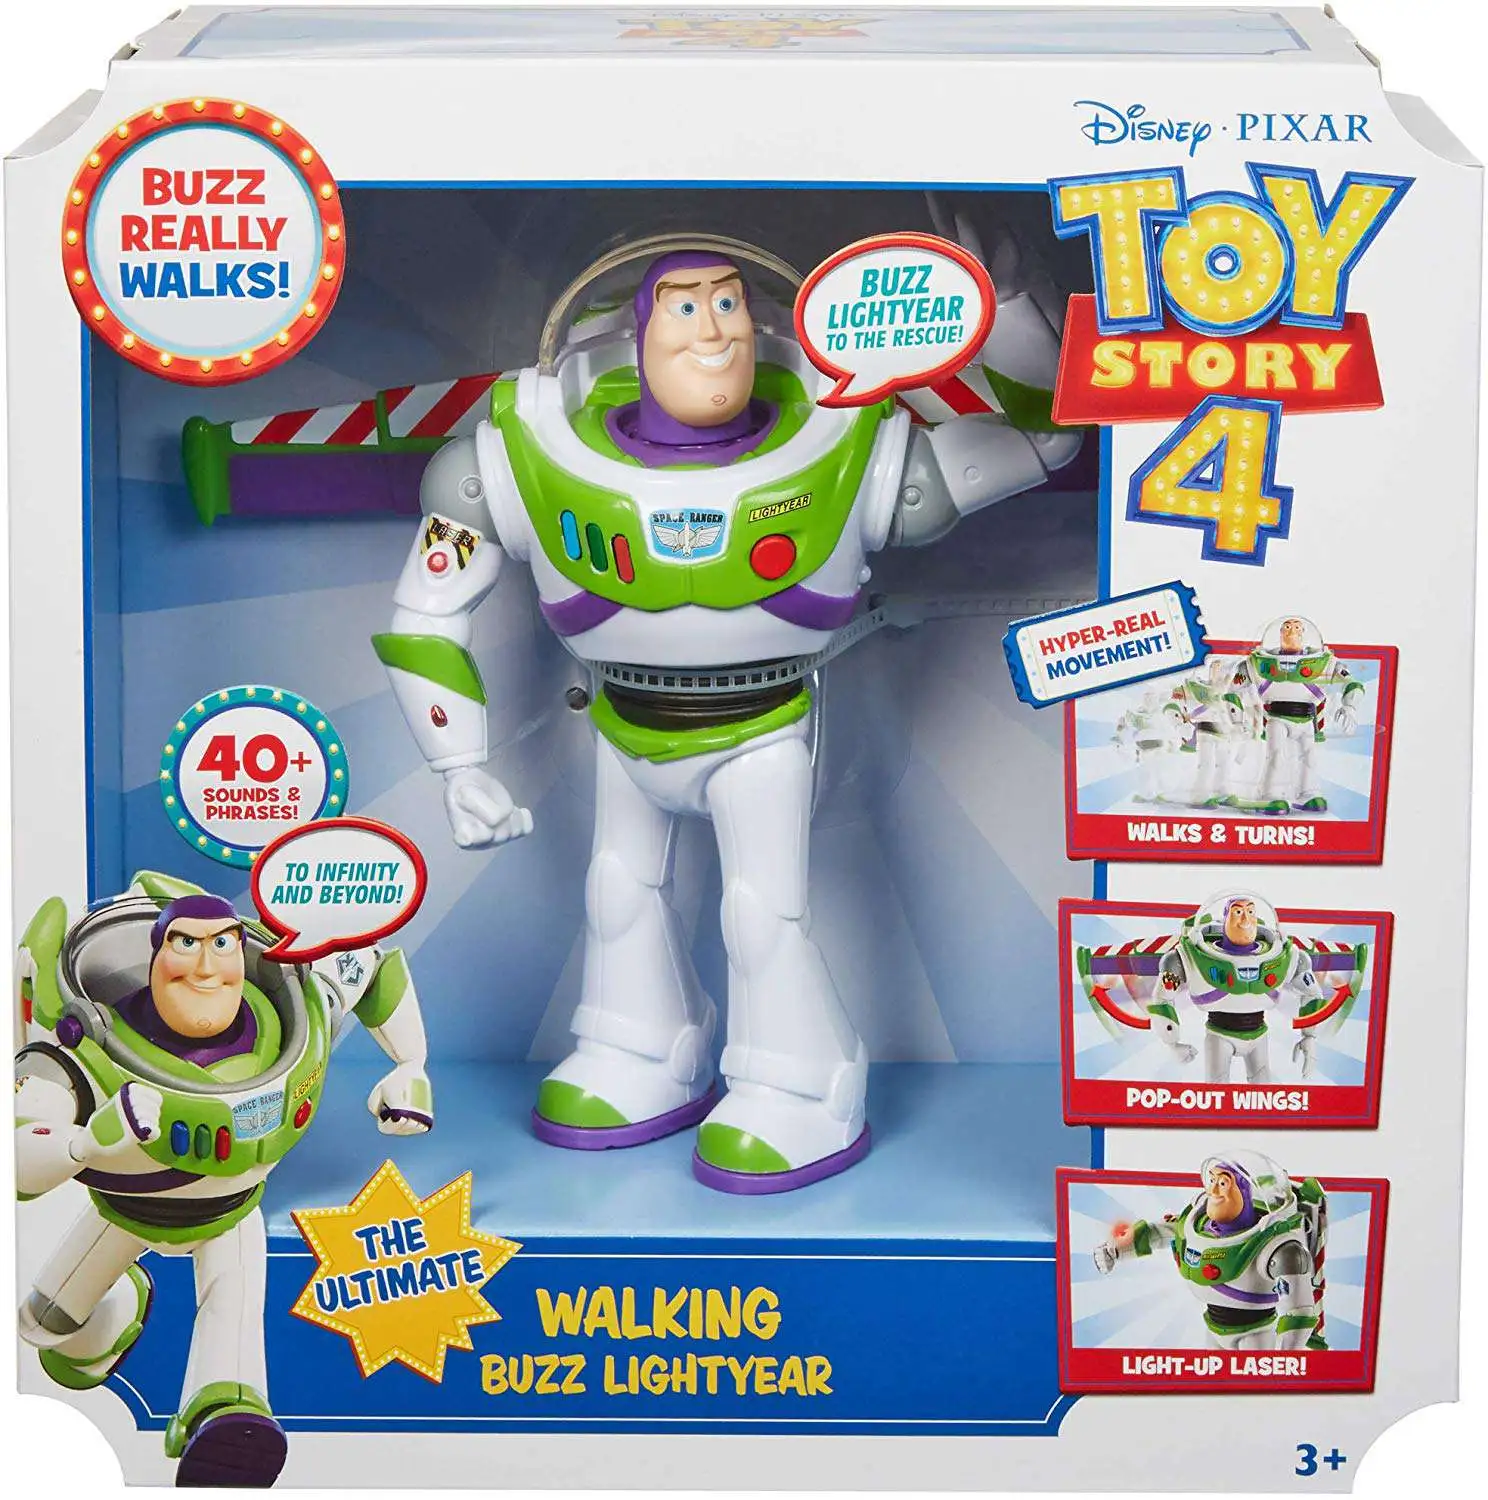 Toy Story 4 The Ultimate Walking Buzz Lightyear NEW Mattel Disney Pixar 